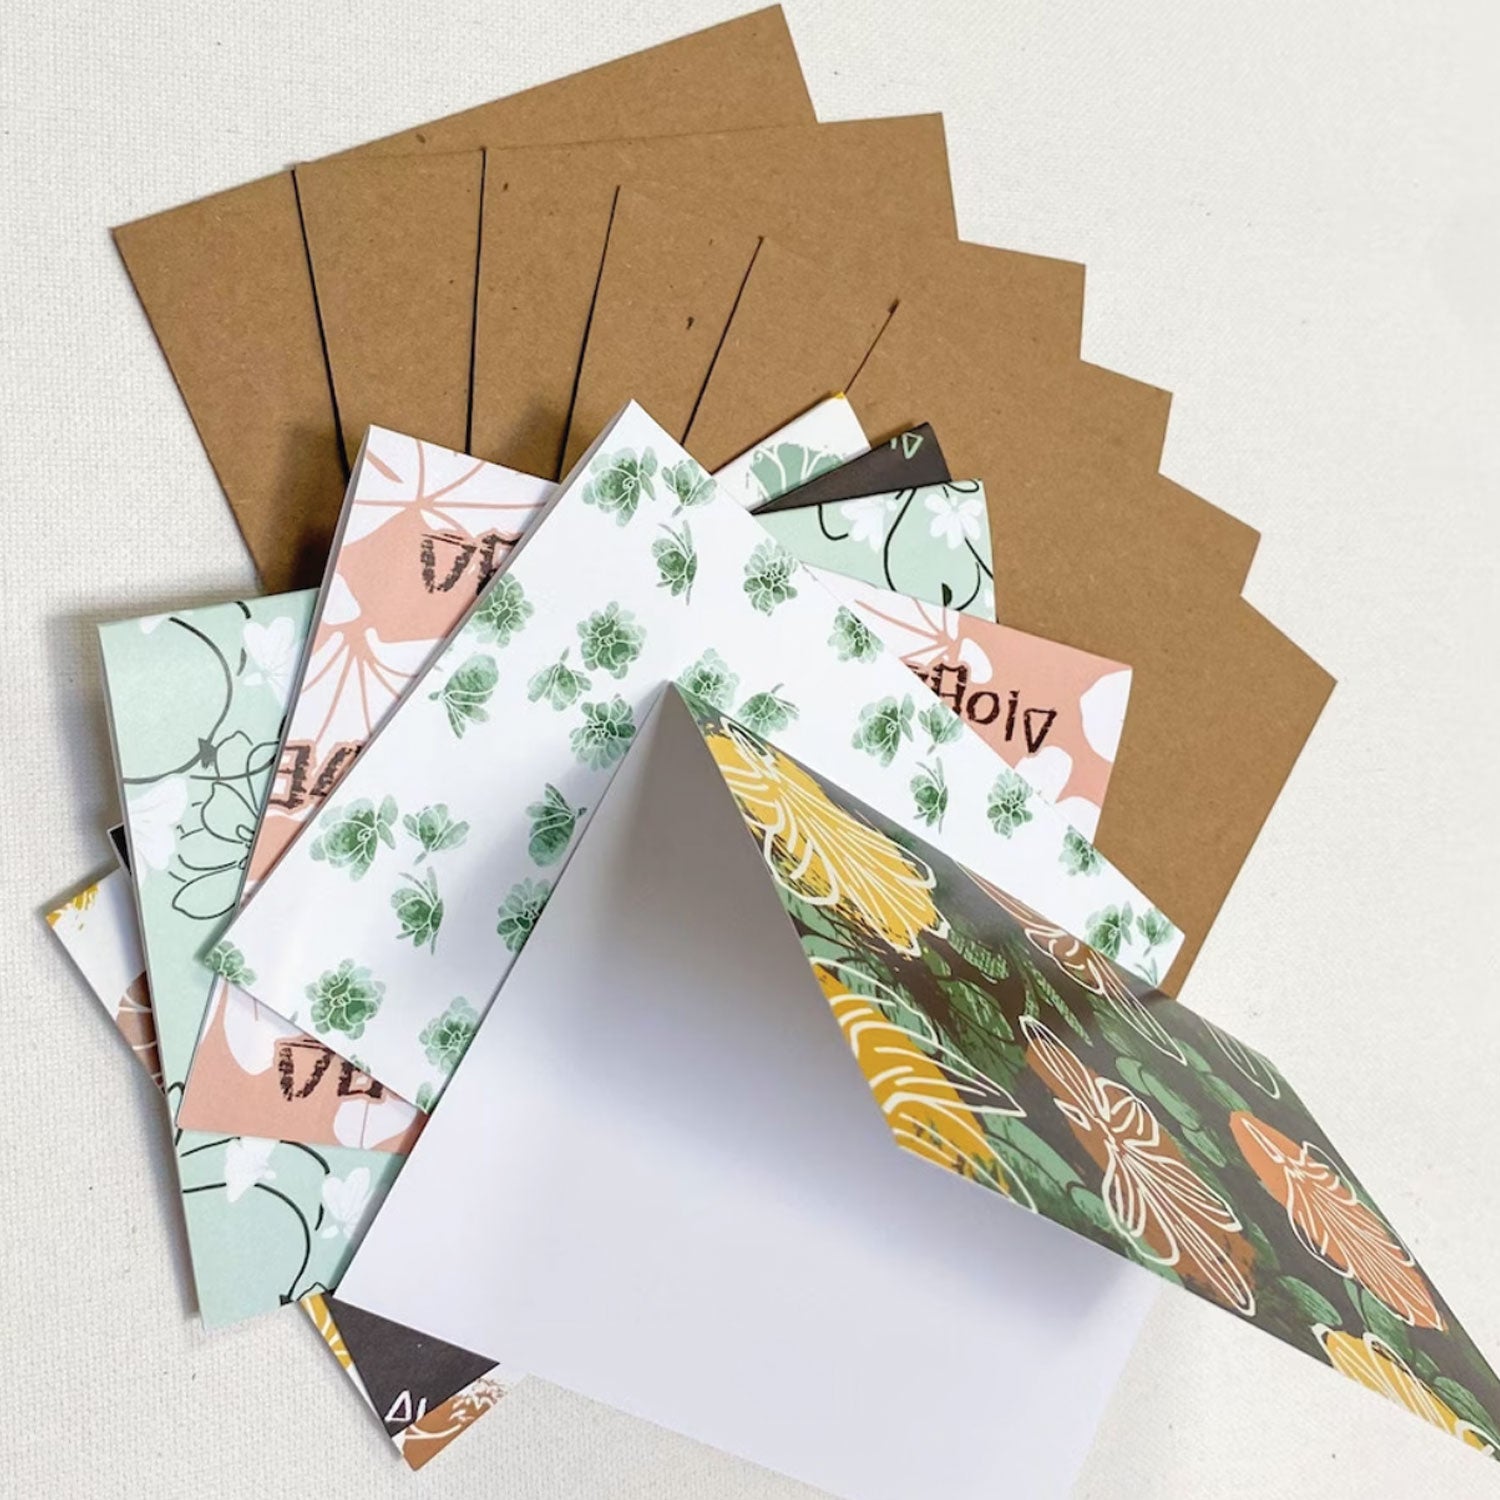 Hawaiian Greeting Cards 4"x6" 6 Pack - Naupaka Aloha Variety